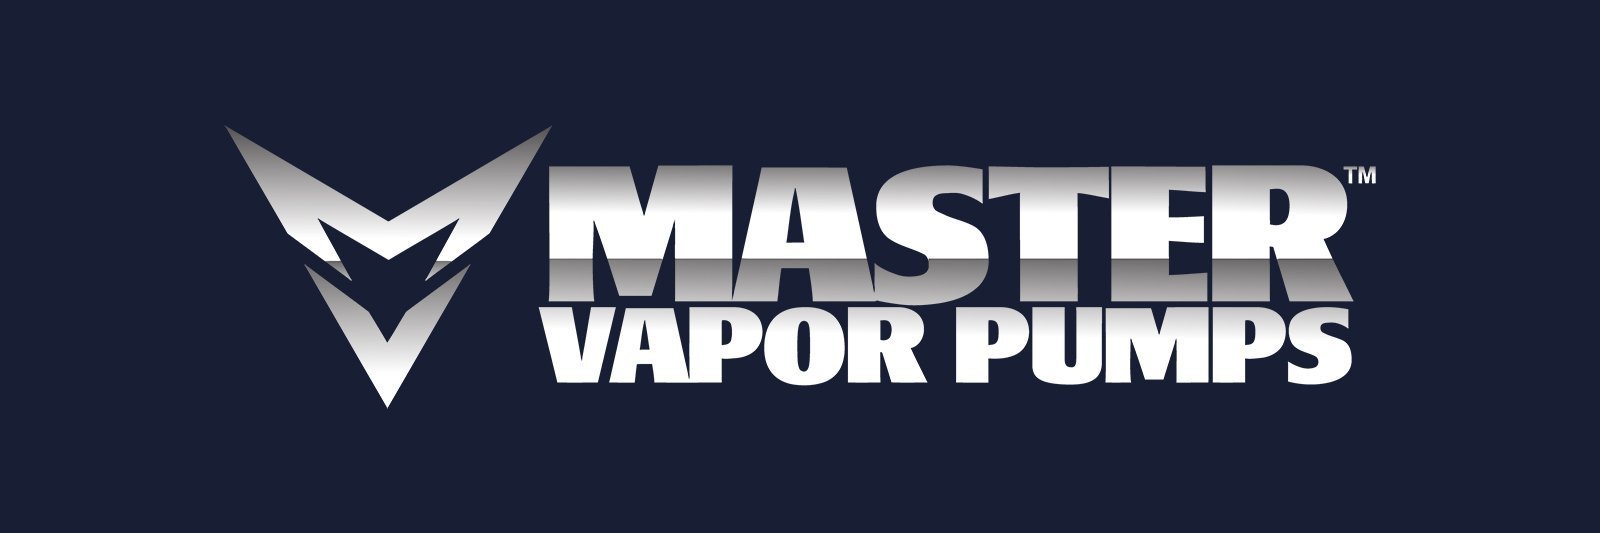 Master Vapor Pumps, Pump Part - MVP - 60 PSI, 150 PSI, Liquid, XL150 - Fill/Vent Fitting Kit